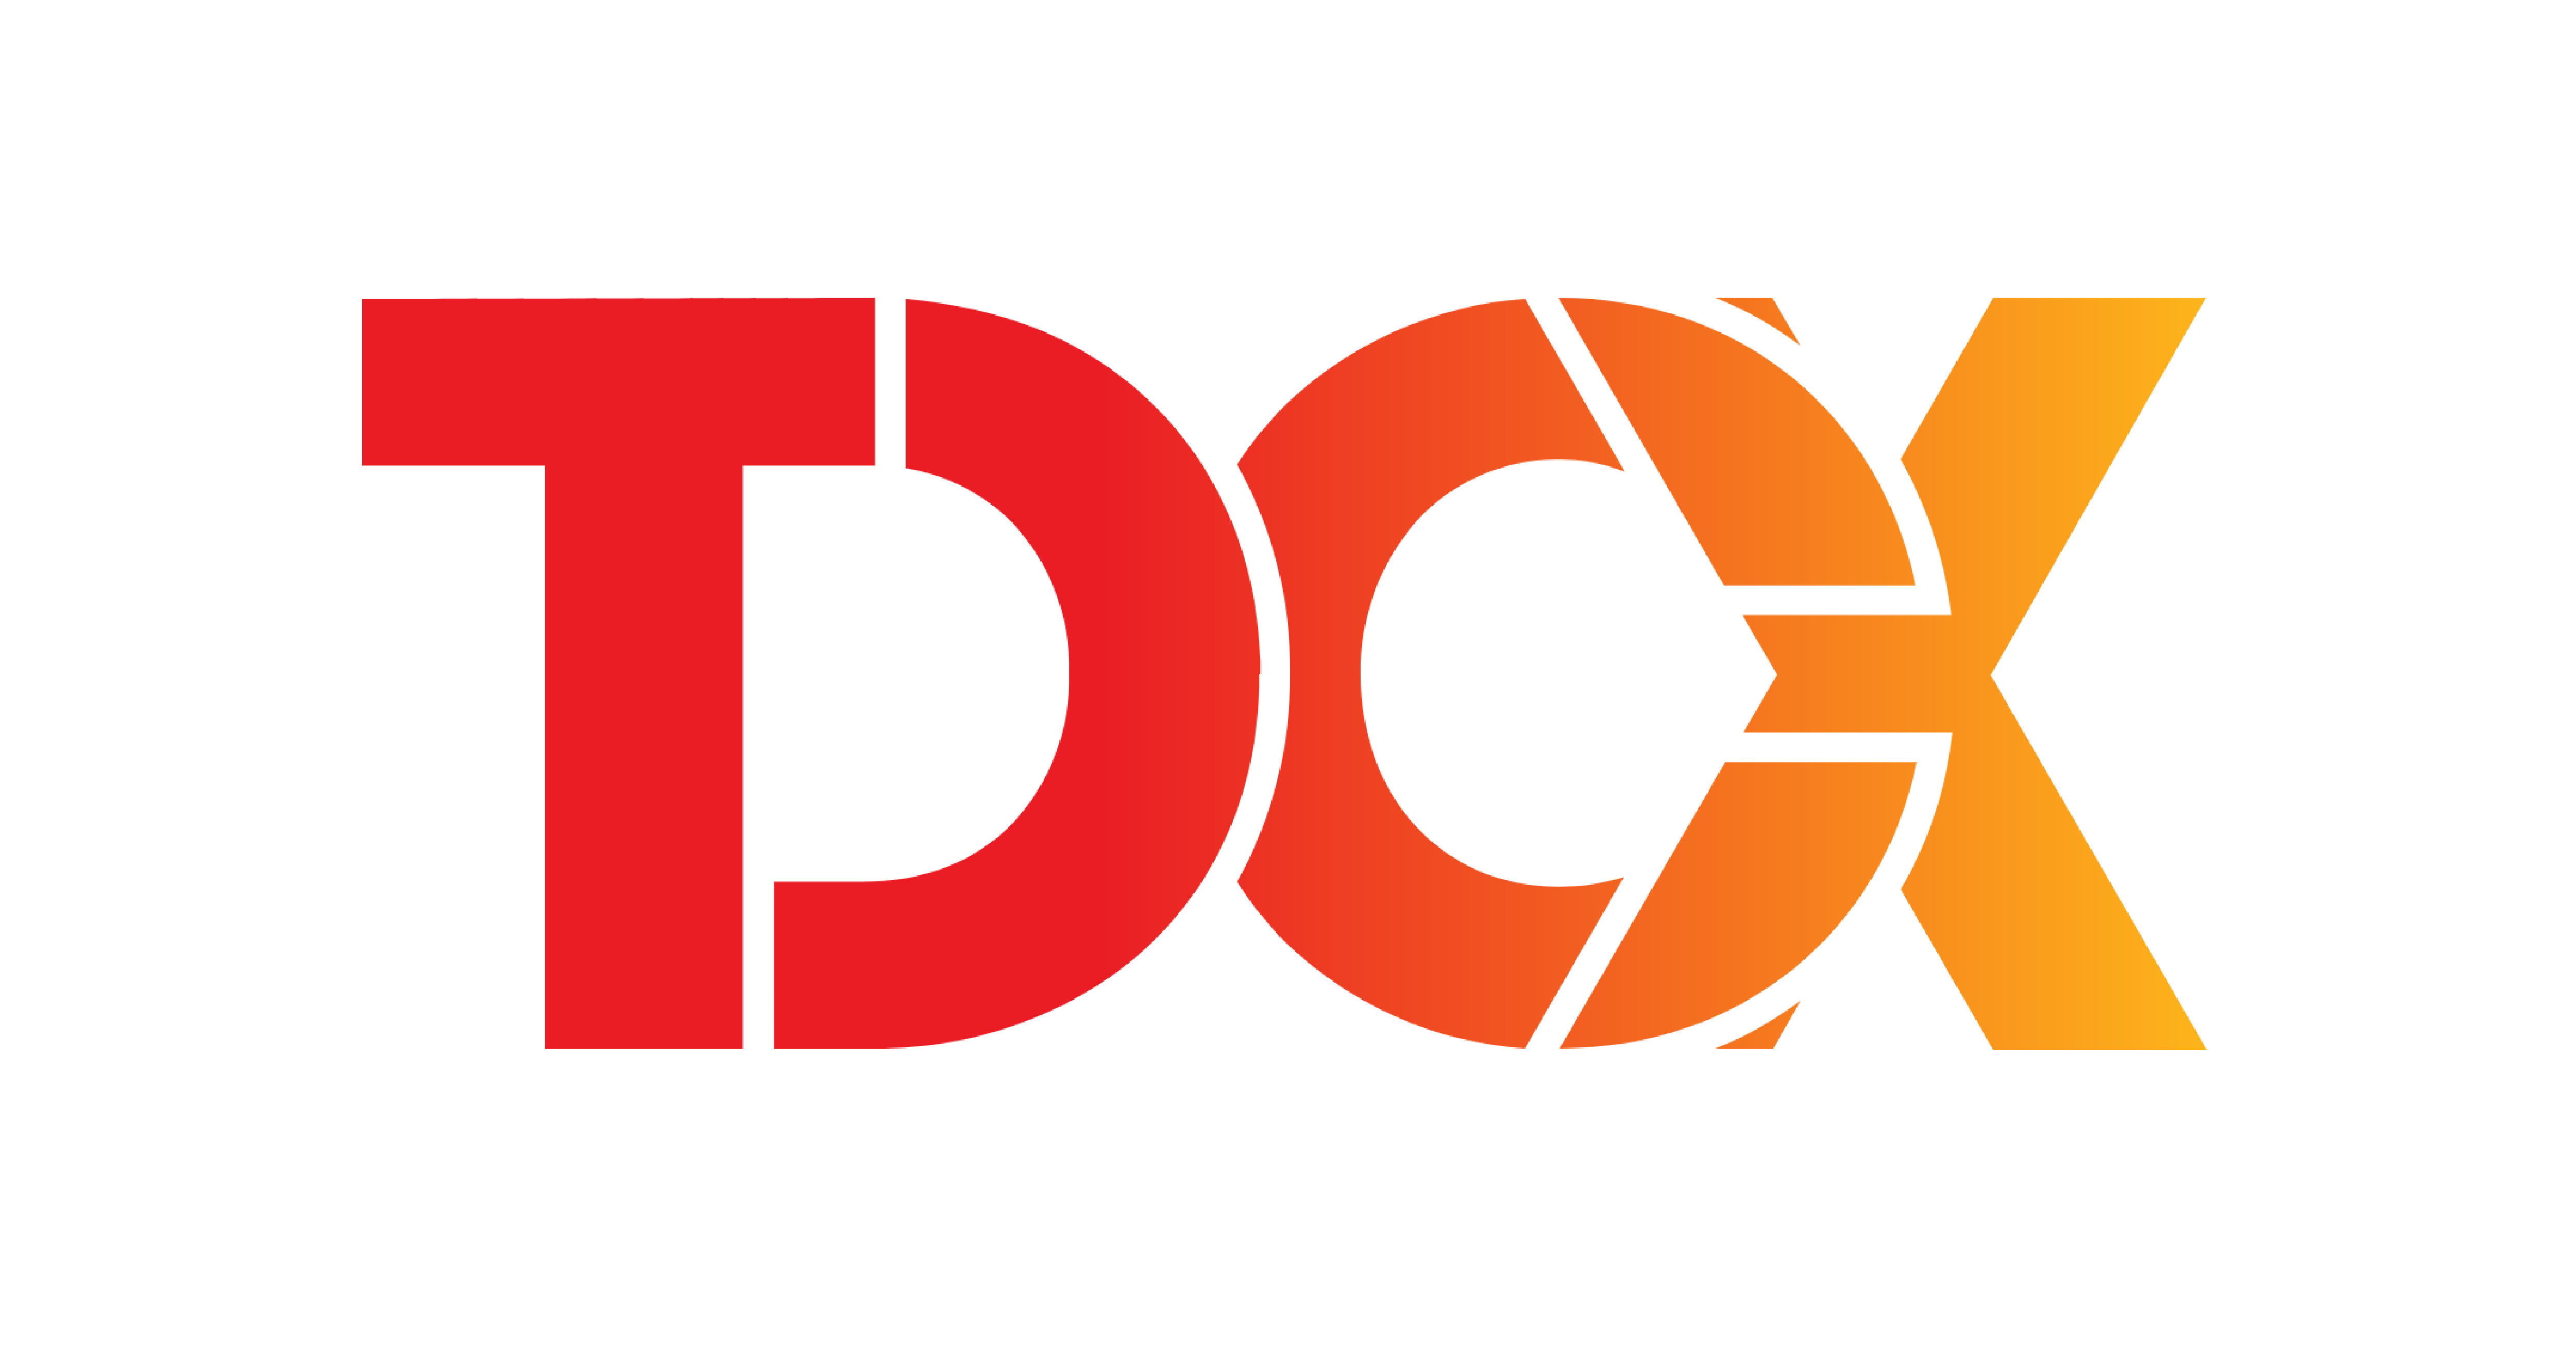 TDCX